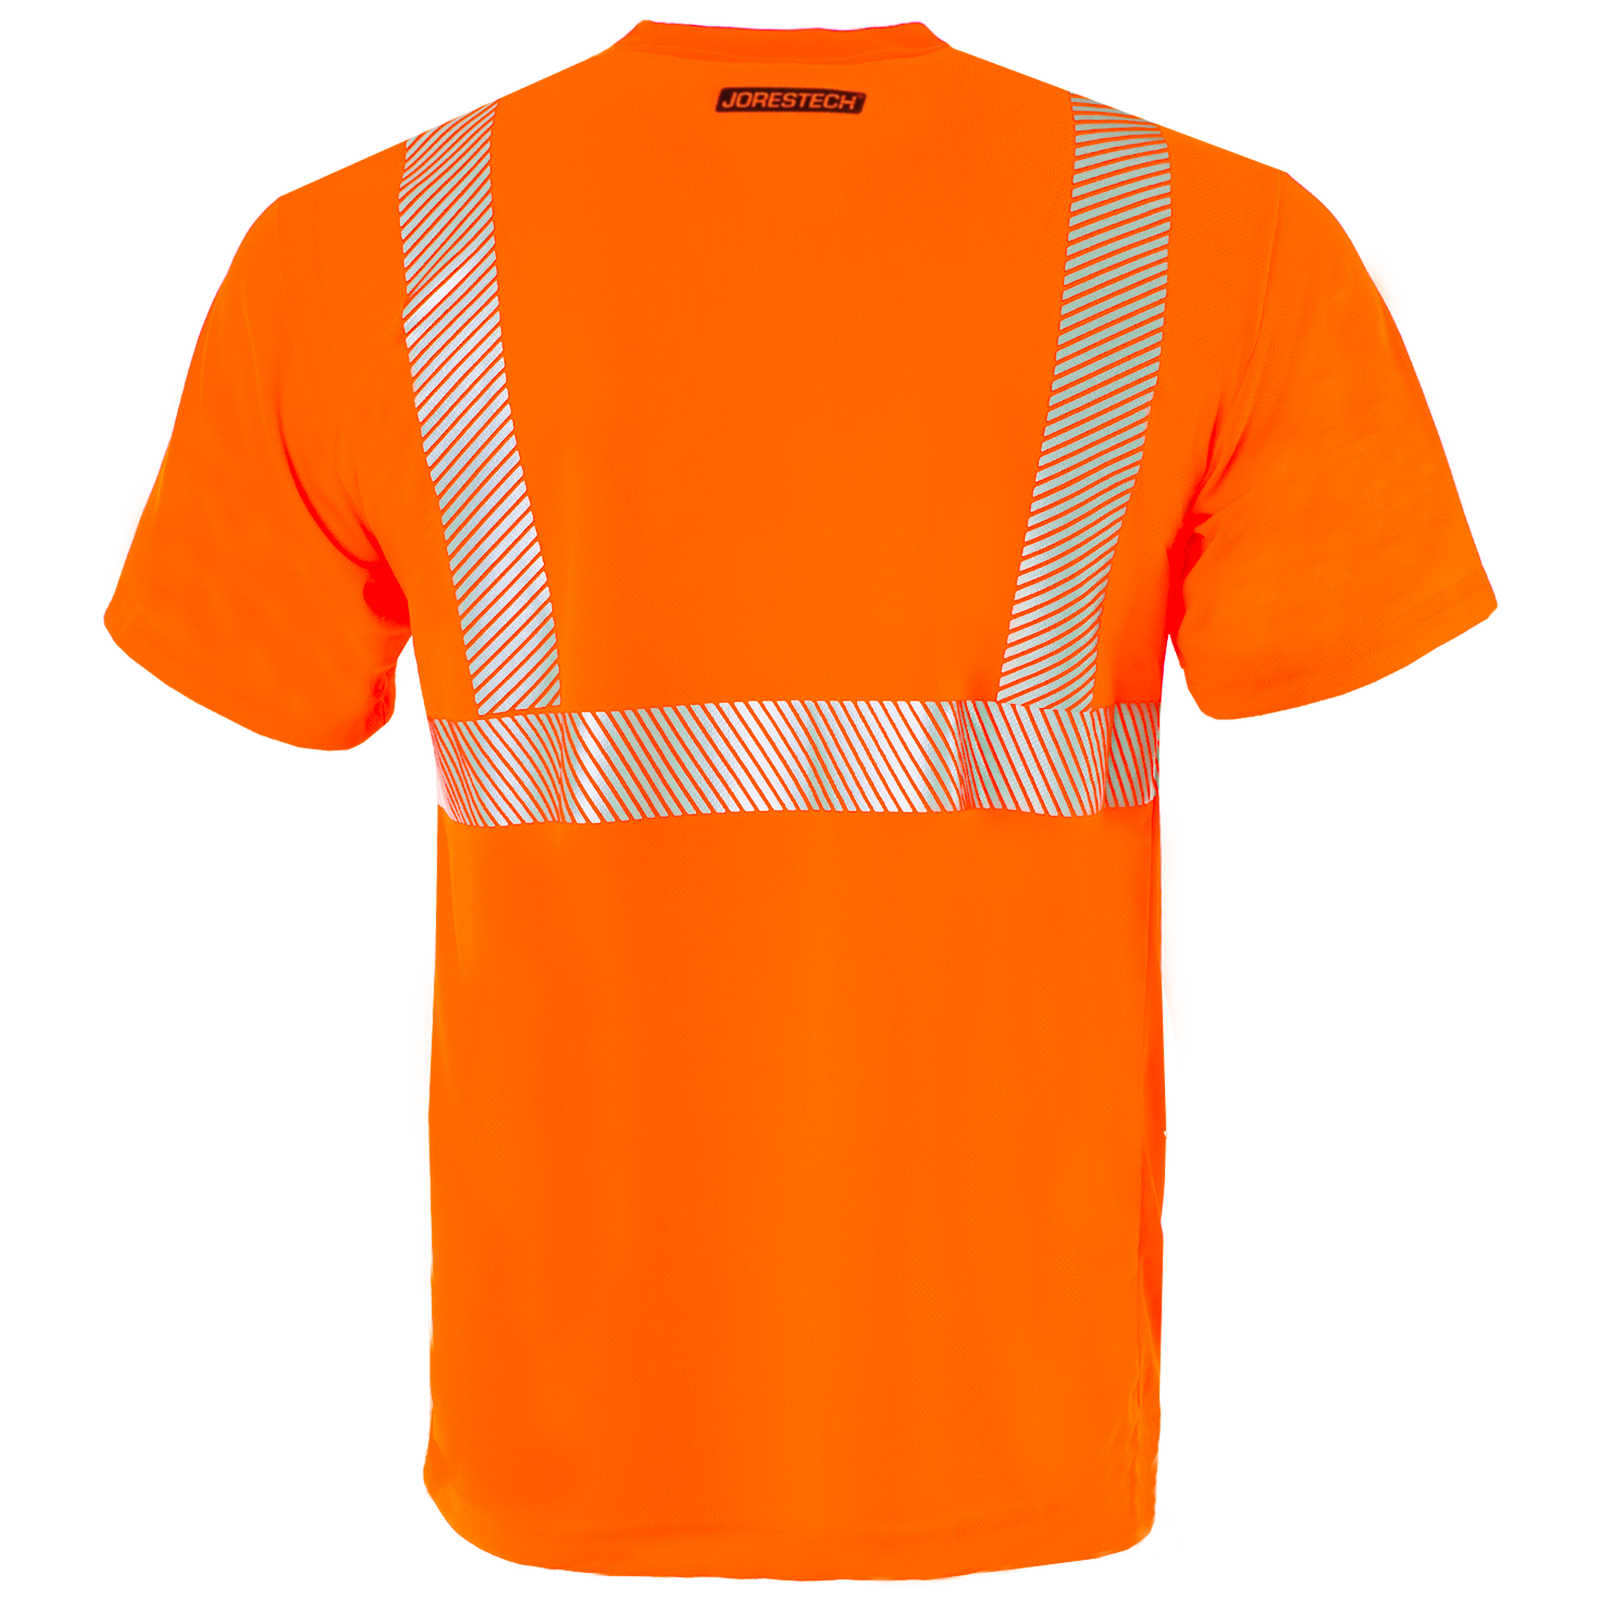 Back view of the Hi-Vis Orange heat transfer reflective safety pocket JORESTECH shirt 